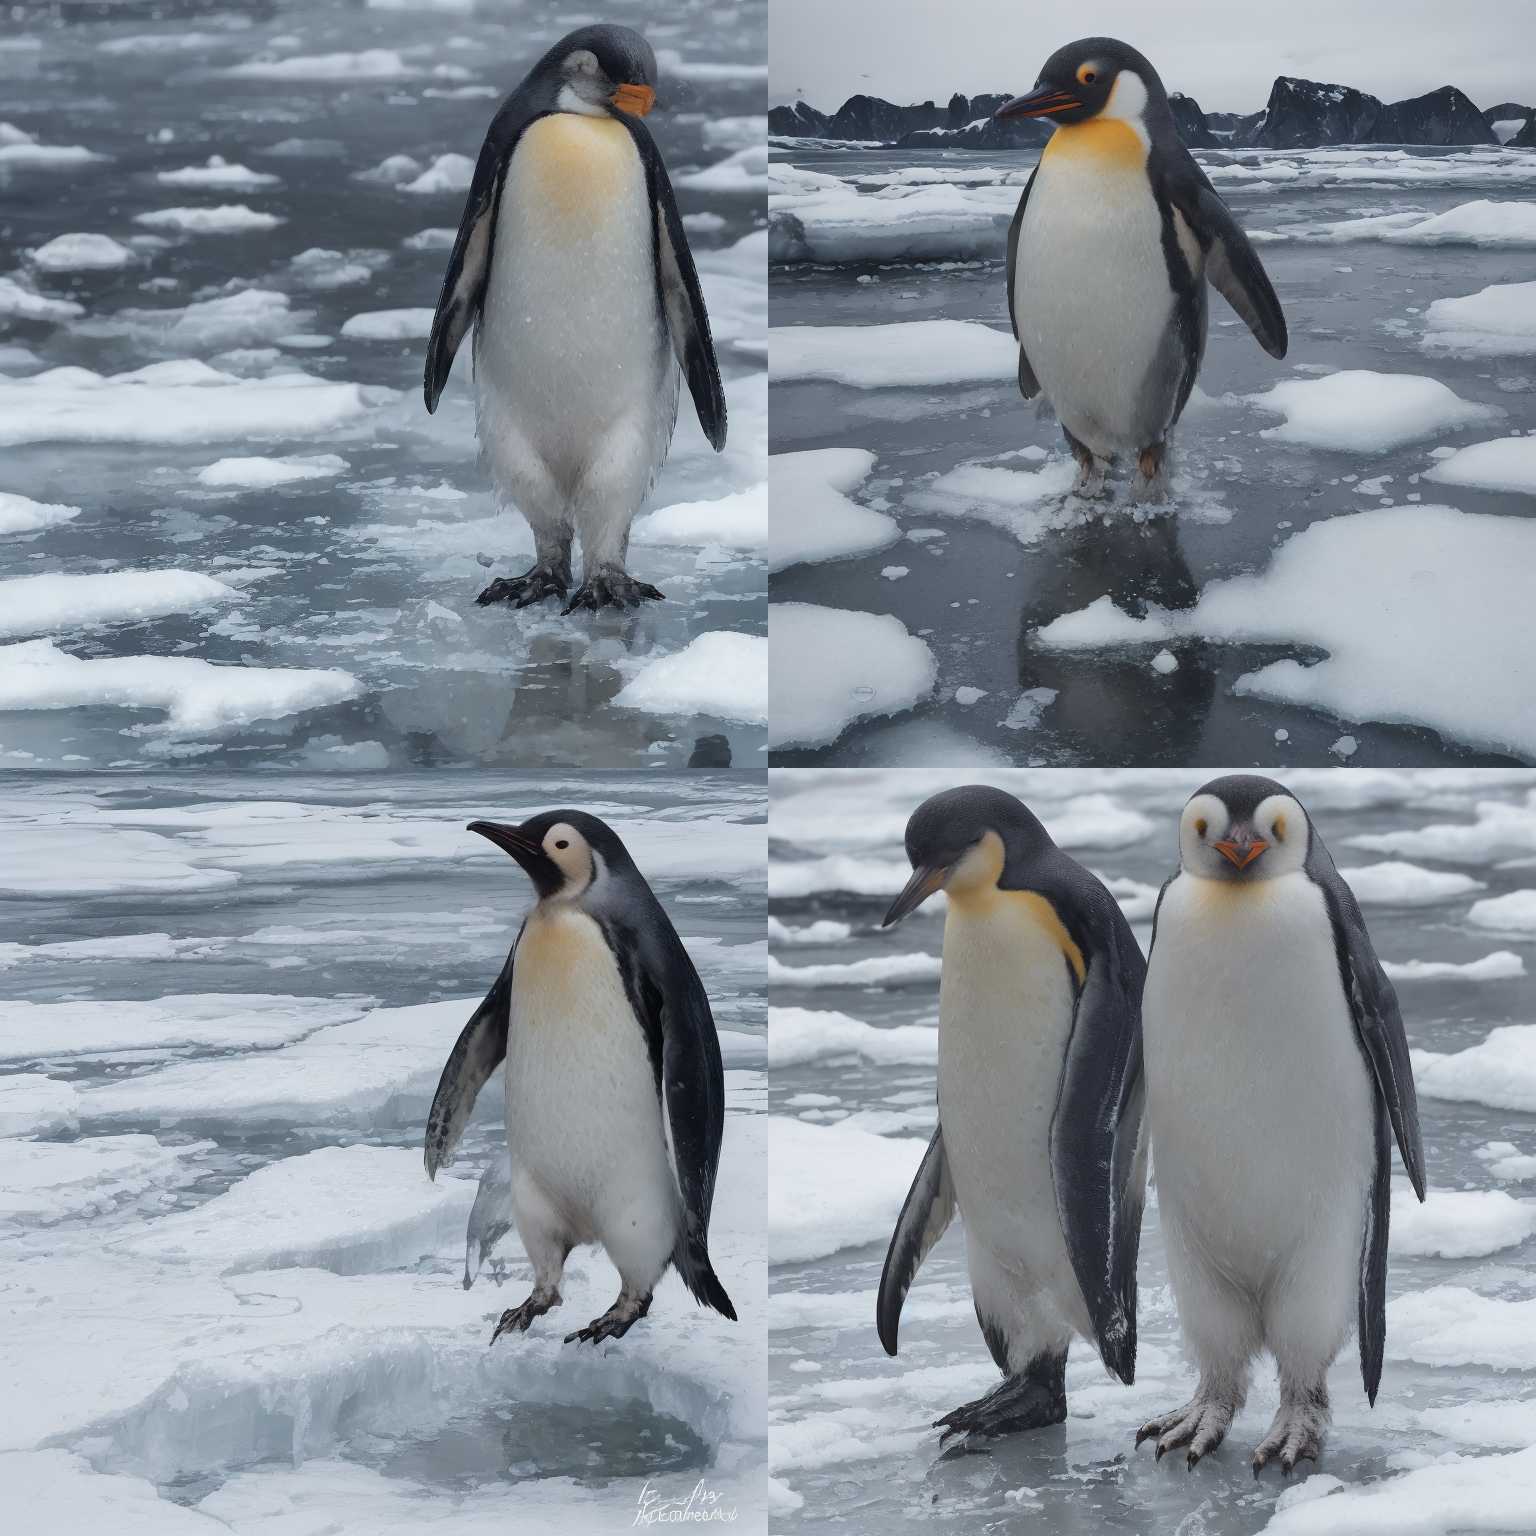 A penguin walking on ice